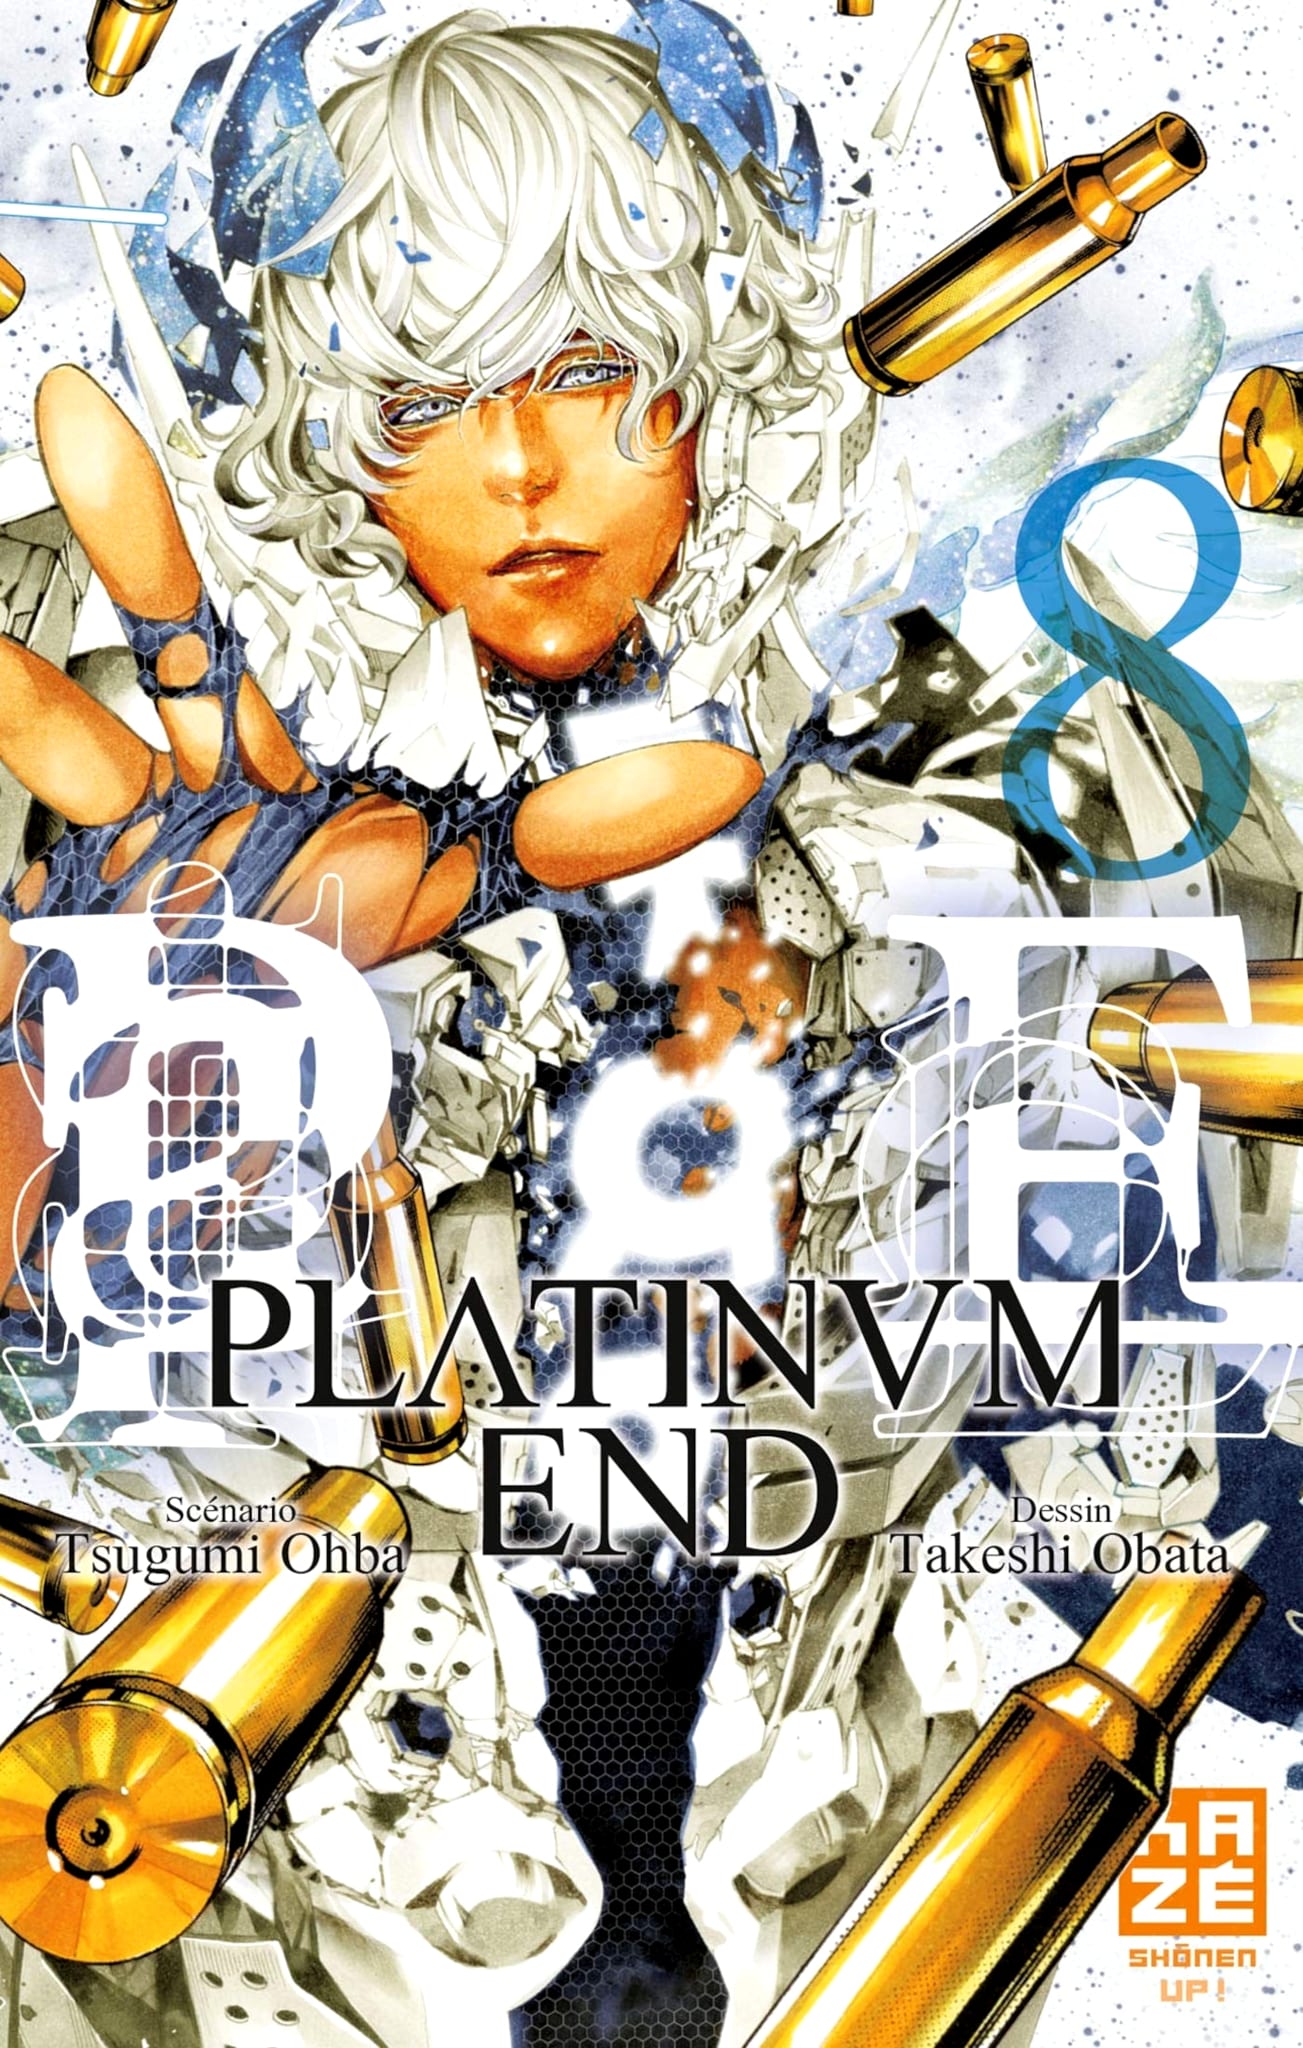 Tome 8 du manga Platinum End